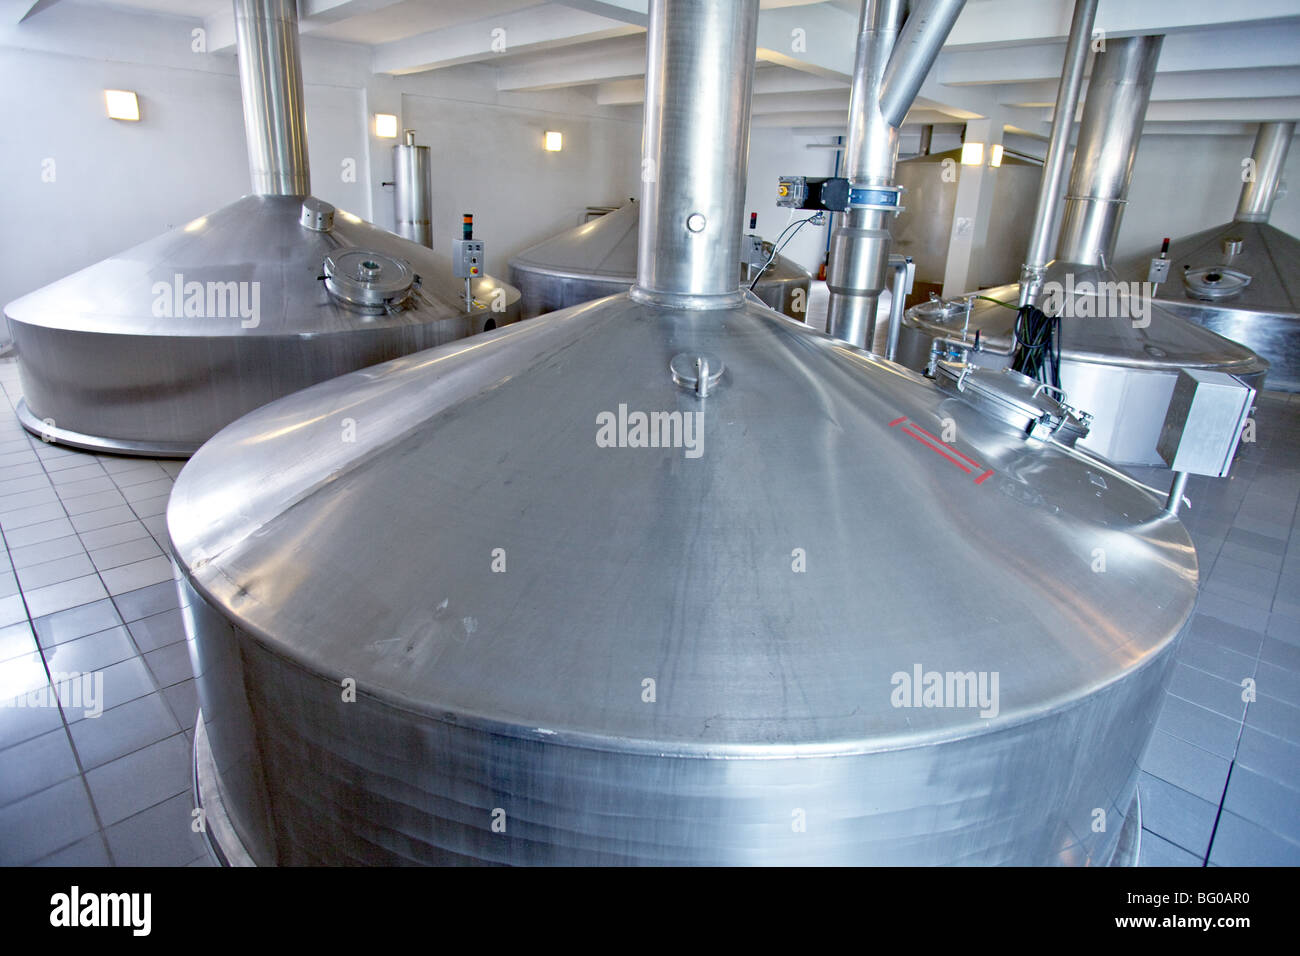 https://c8.alamy.com/comp/BG0AR0/modern-beer-brewing-kettle-in-a-brewery-in-poland-BG0AR0.jpg